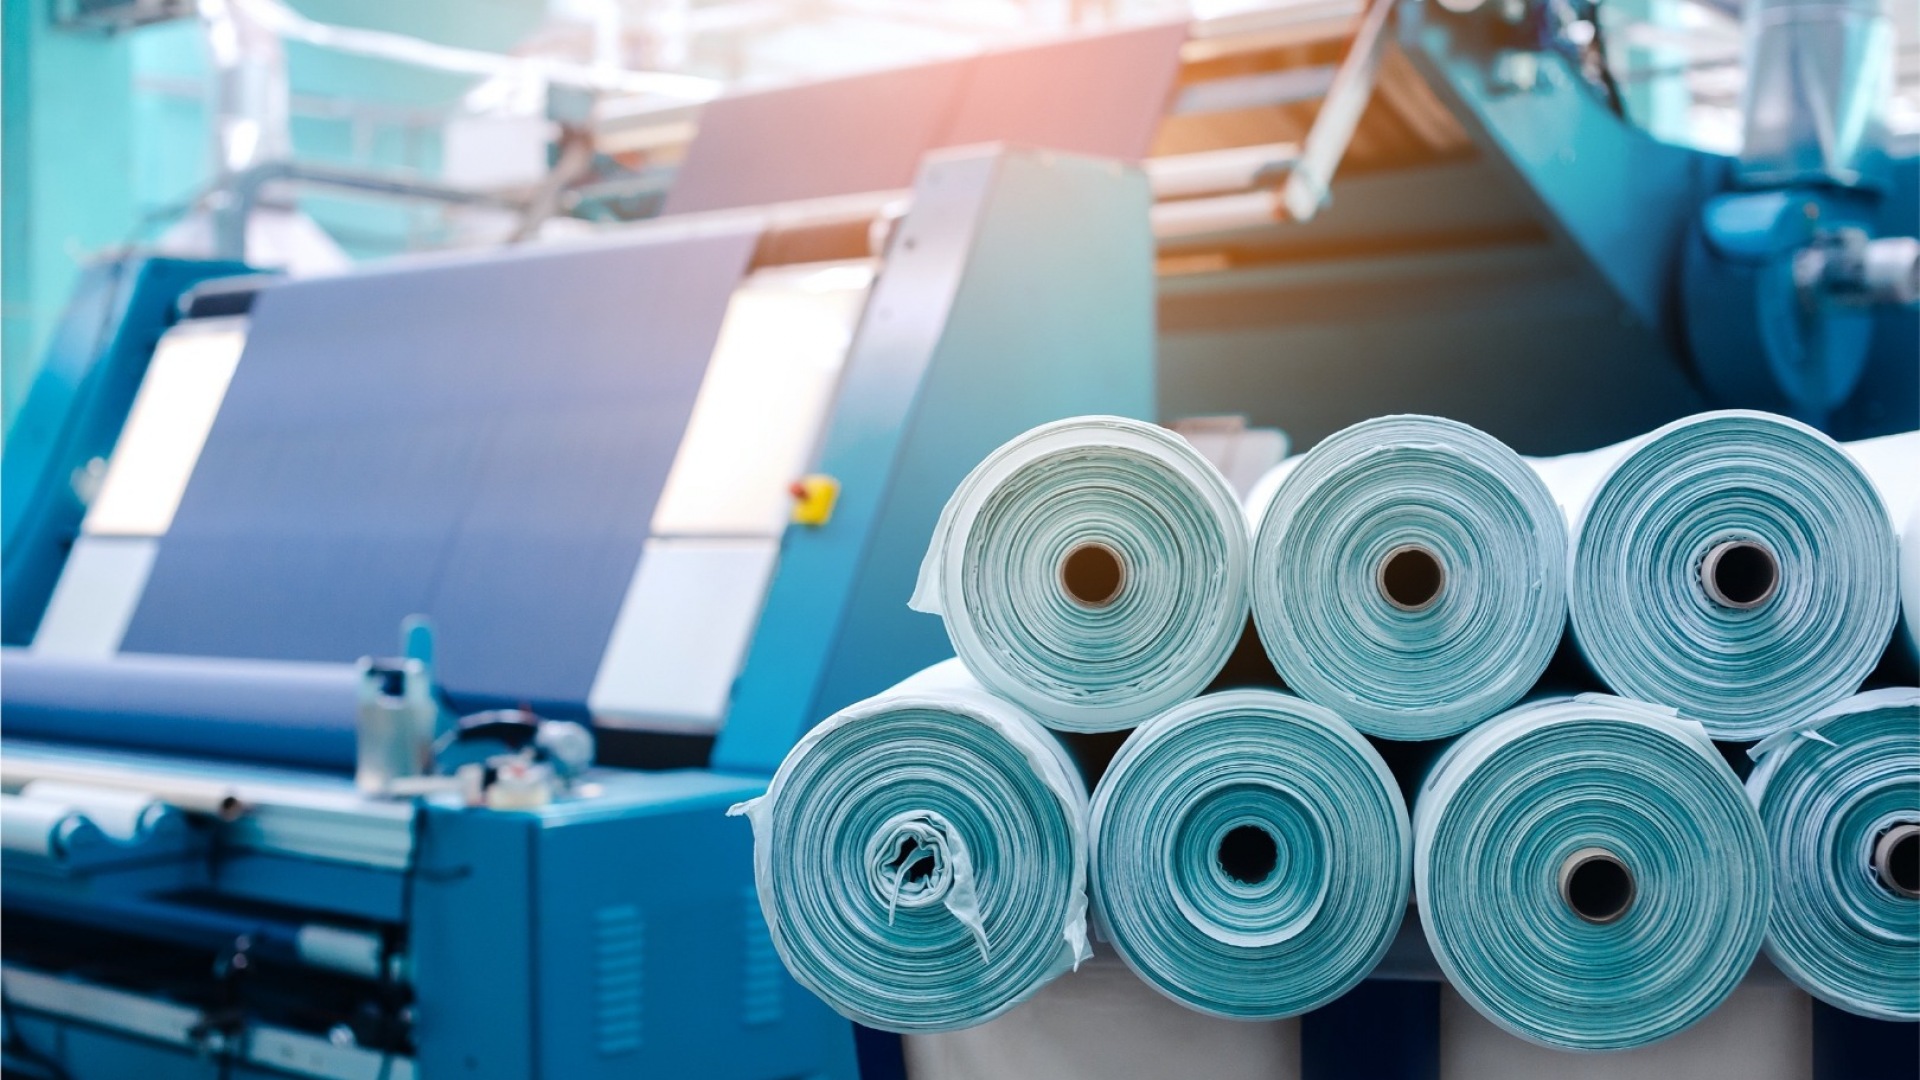 Specialist Textile Manufacturing Services, Technical Textiles Manufacturer